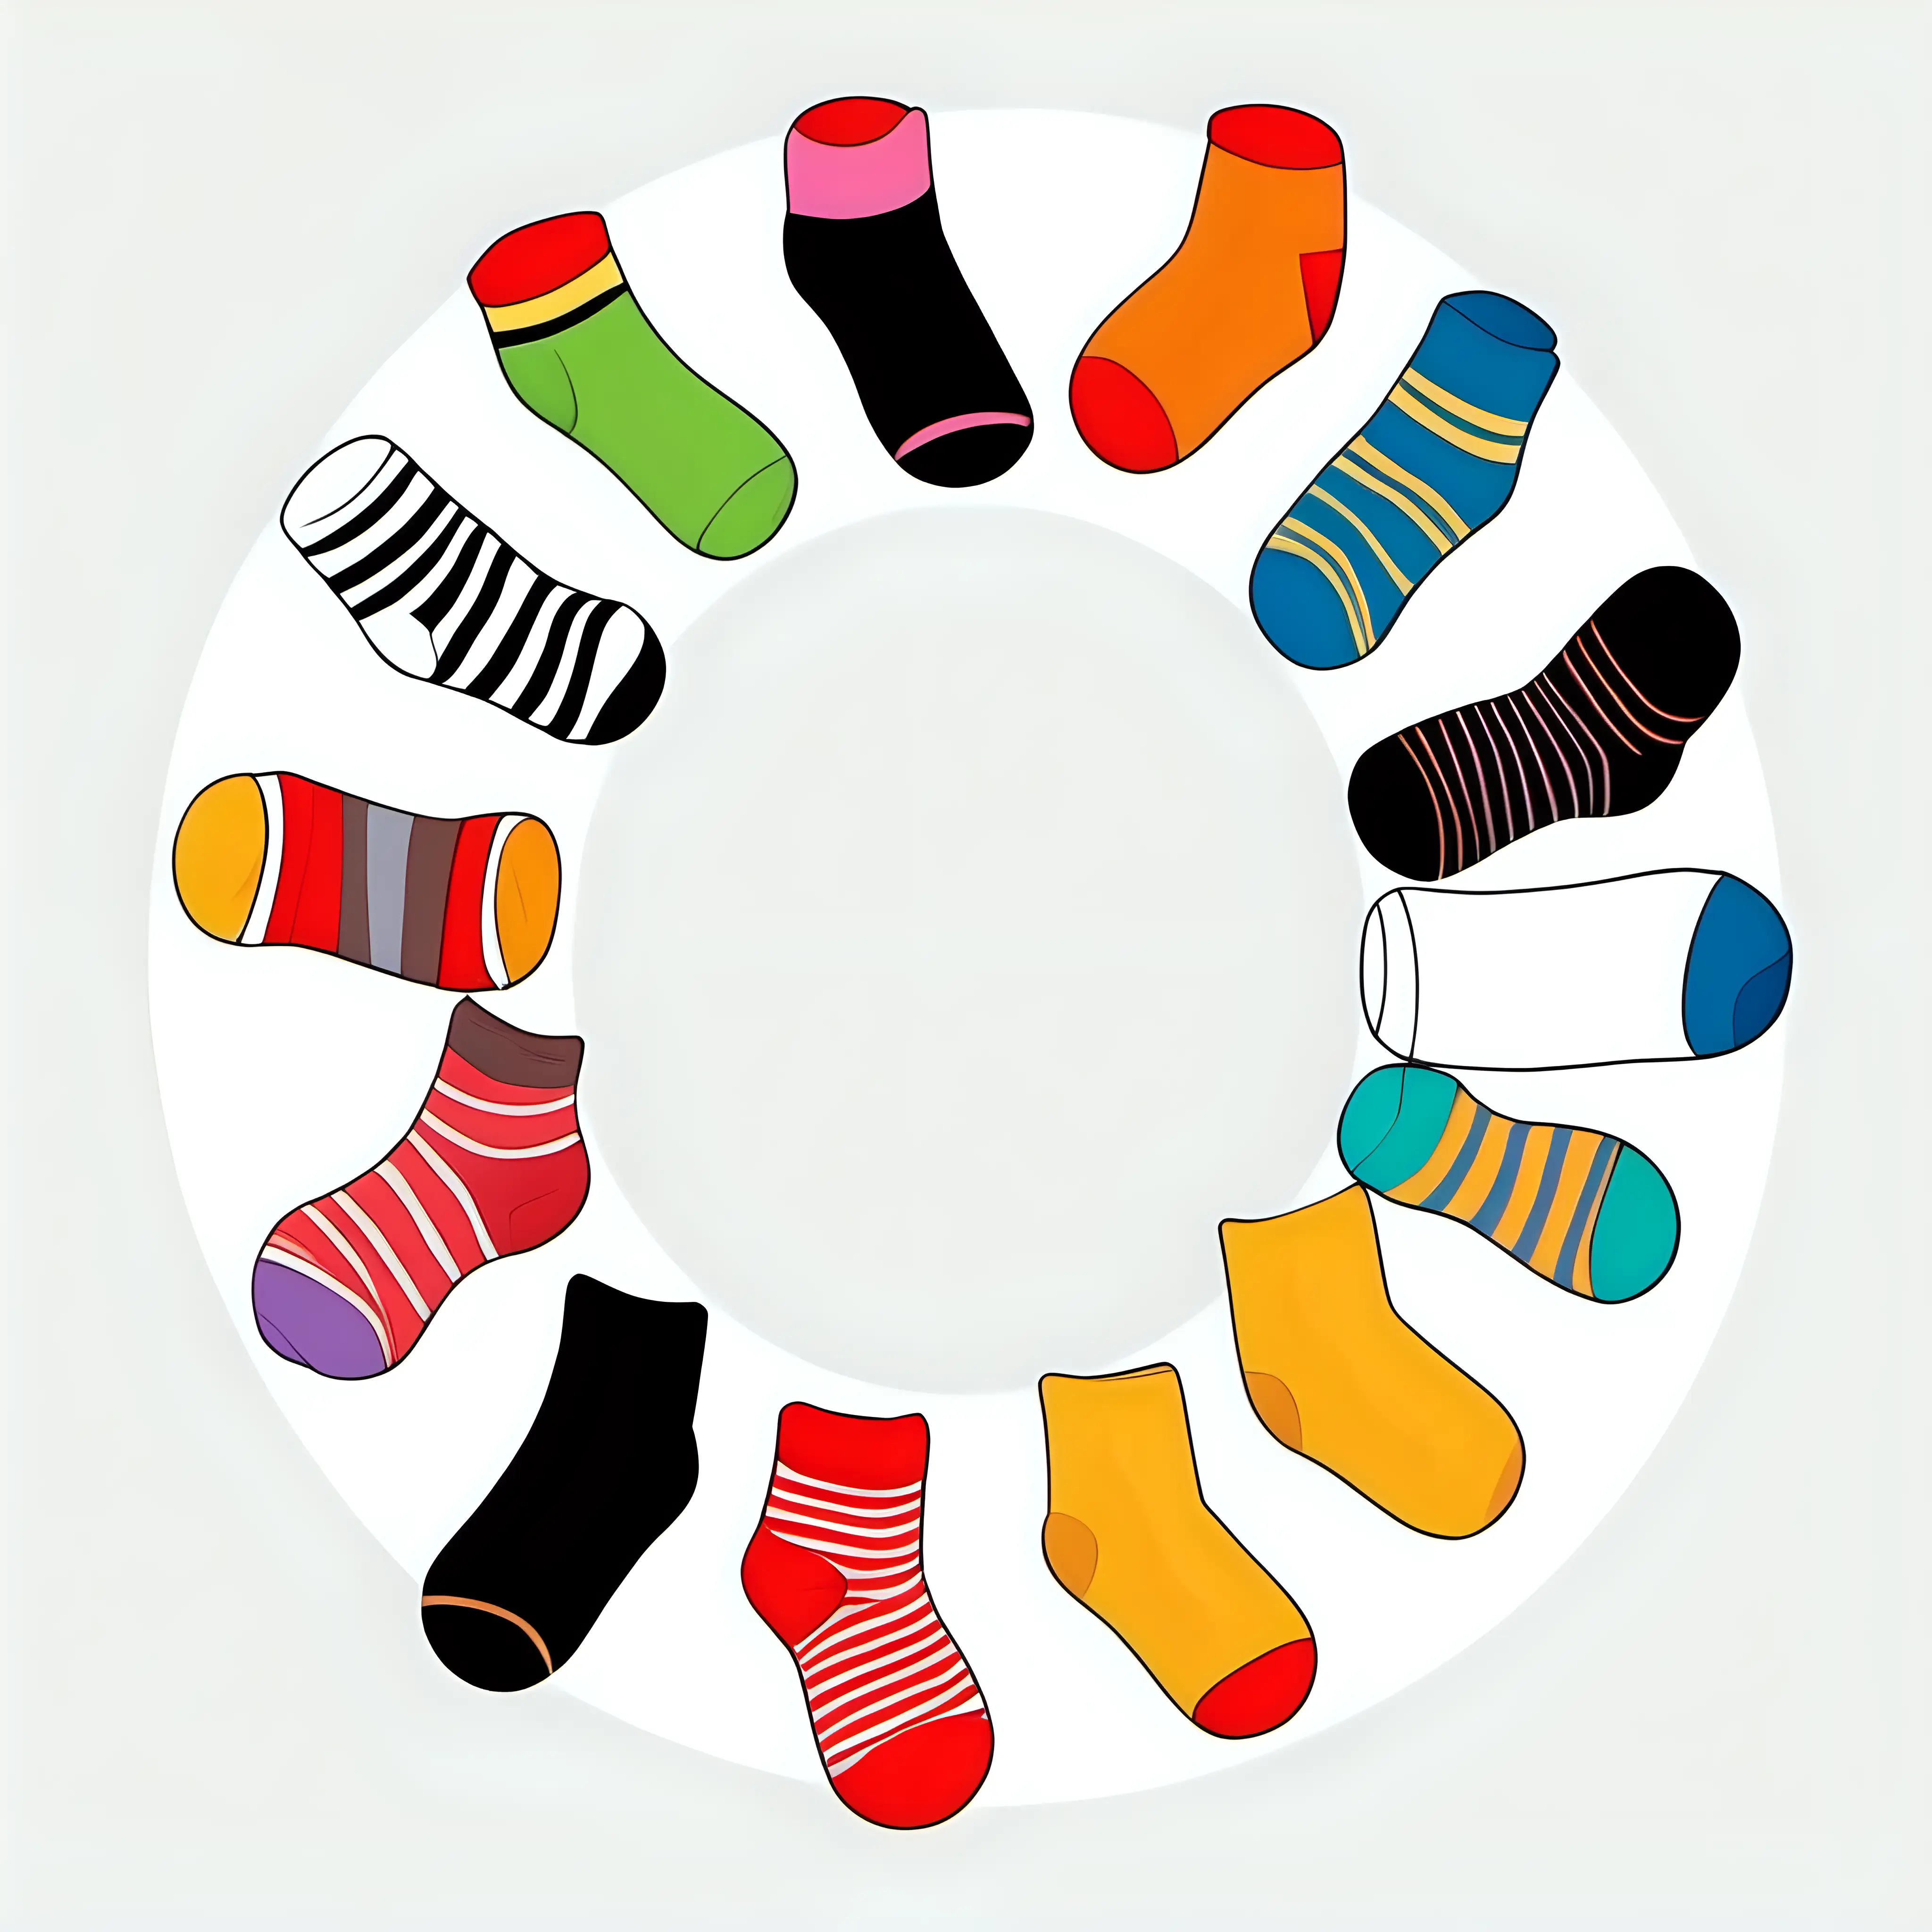 CARTOONISH white socks, colored socks, various socks  forming circle on a white background, cartoon style